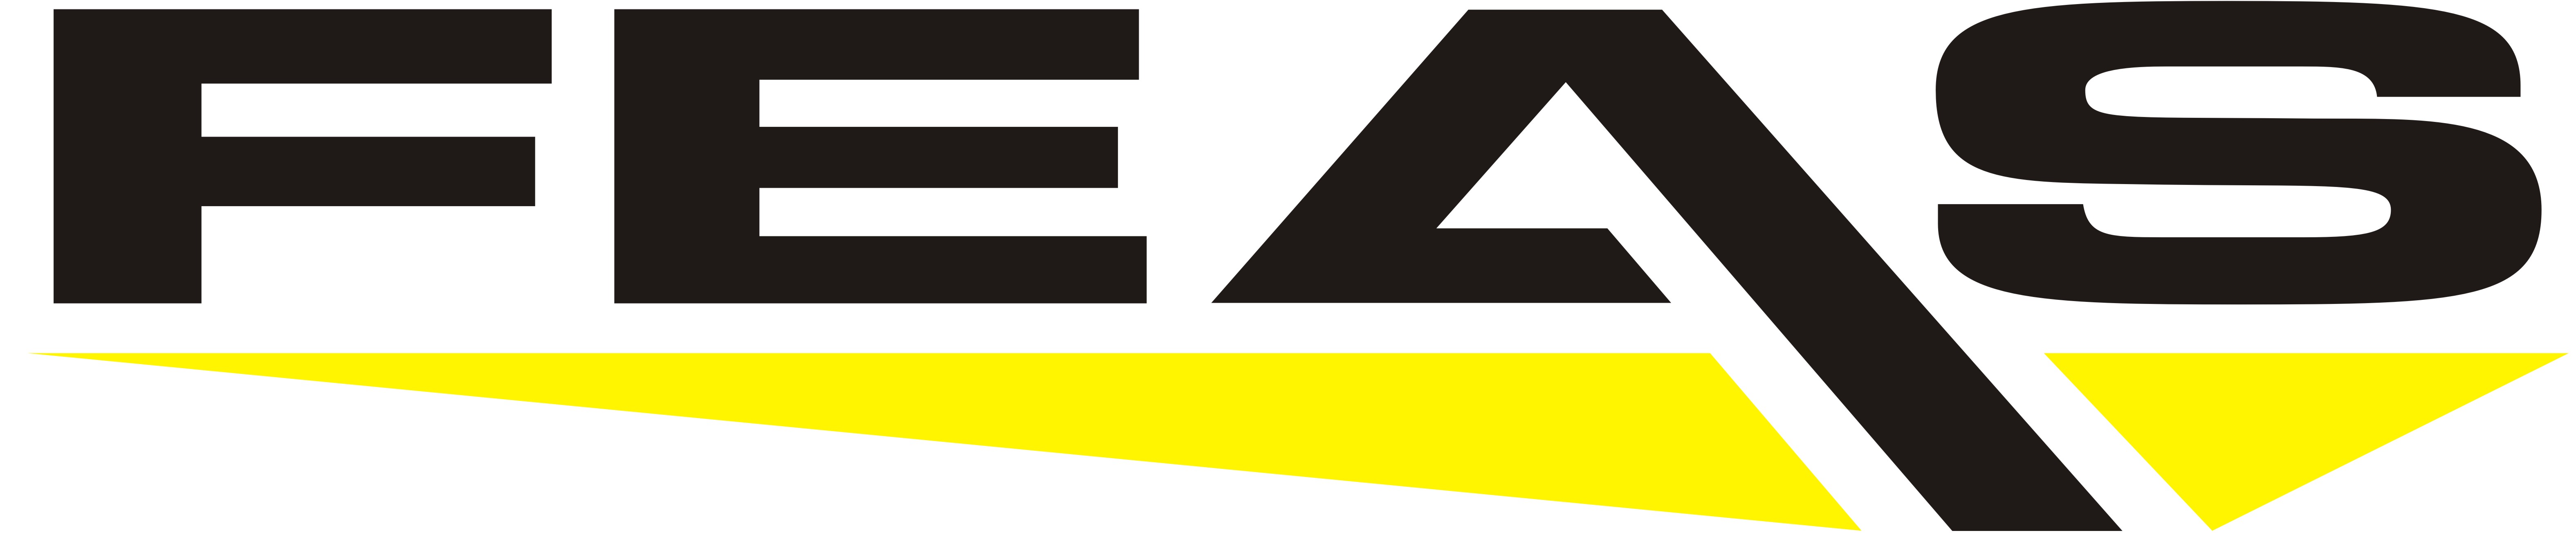 FEAS-Logo1